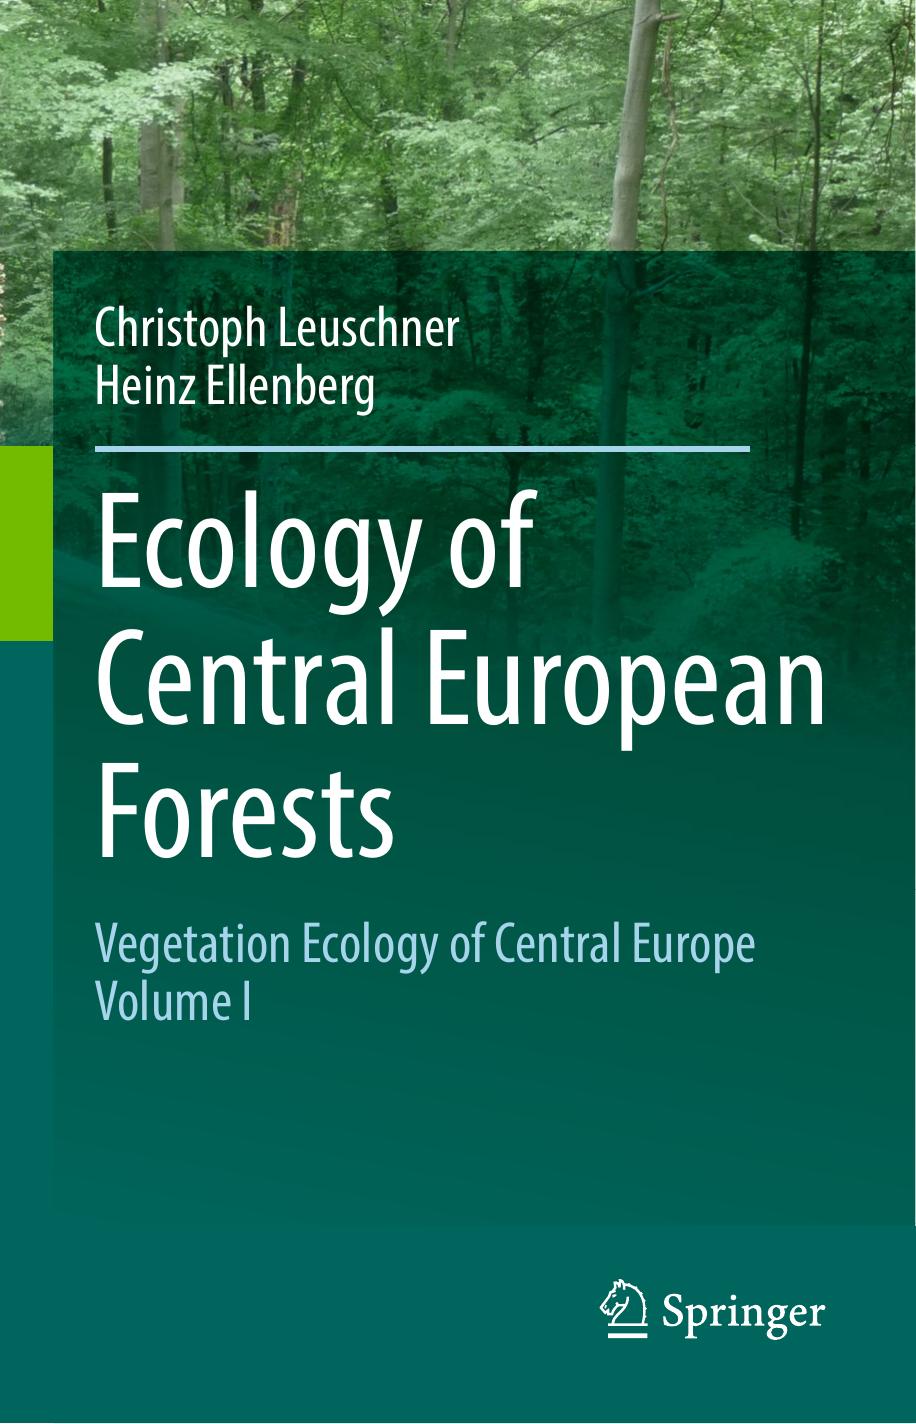 Vegetation ecology of Central Europe. Volume I, Ecology of Central European forests 2017